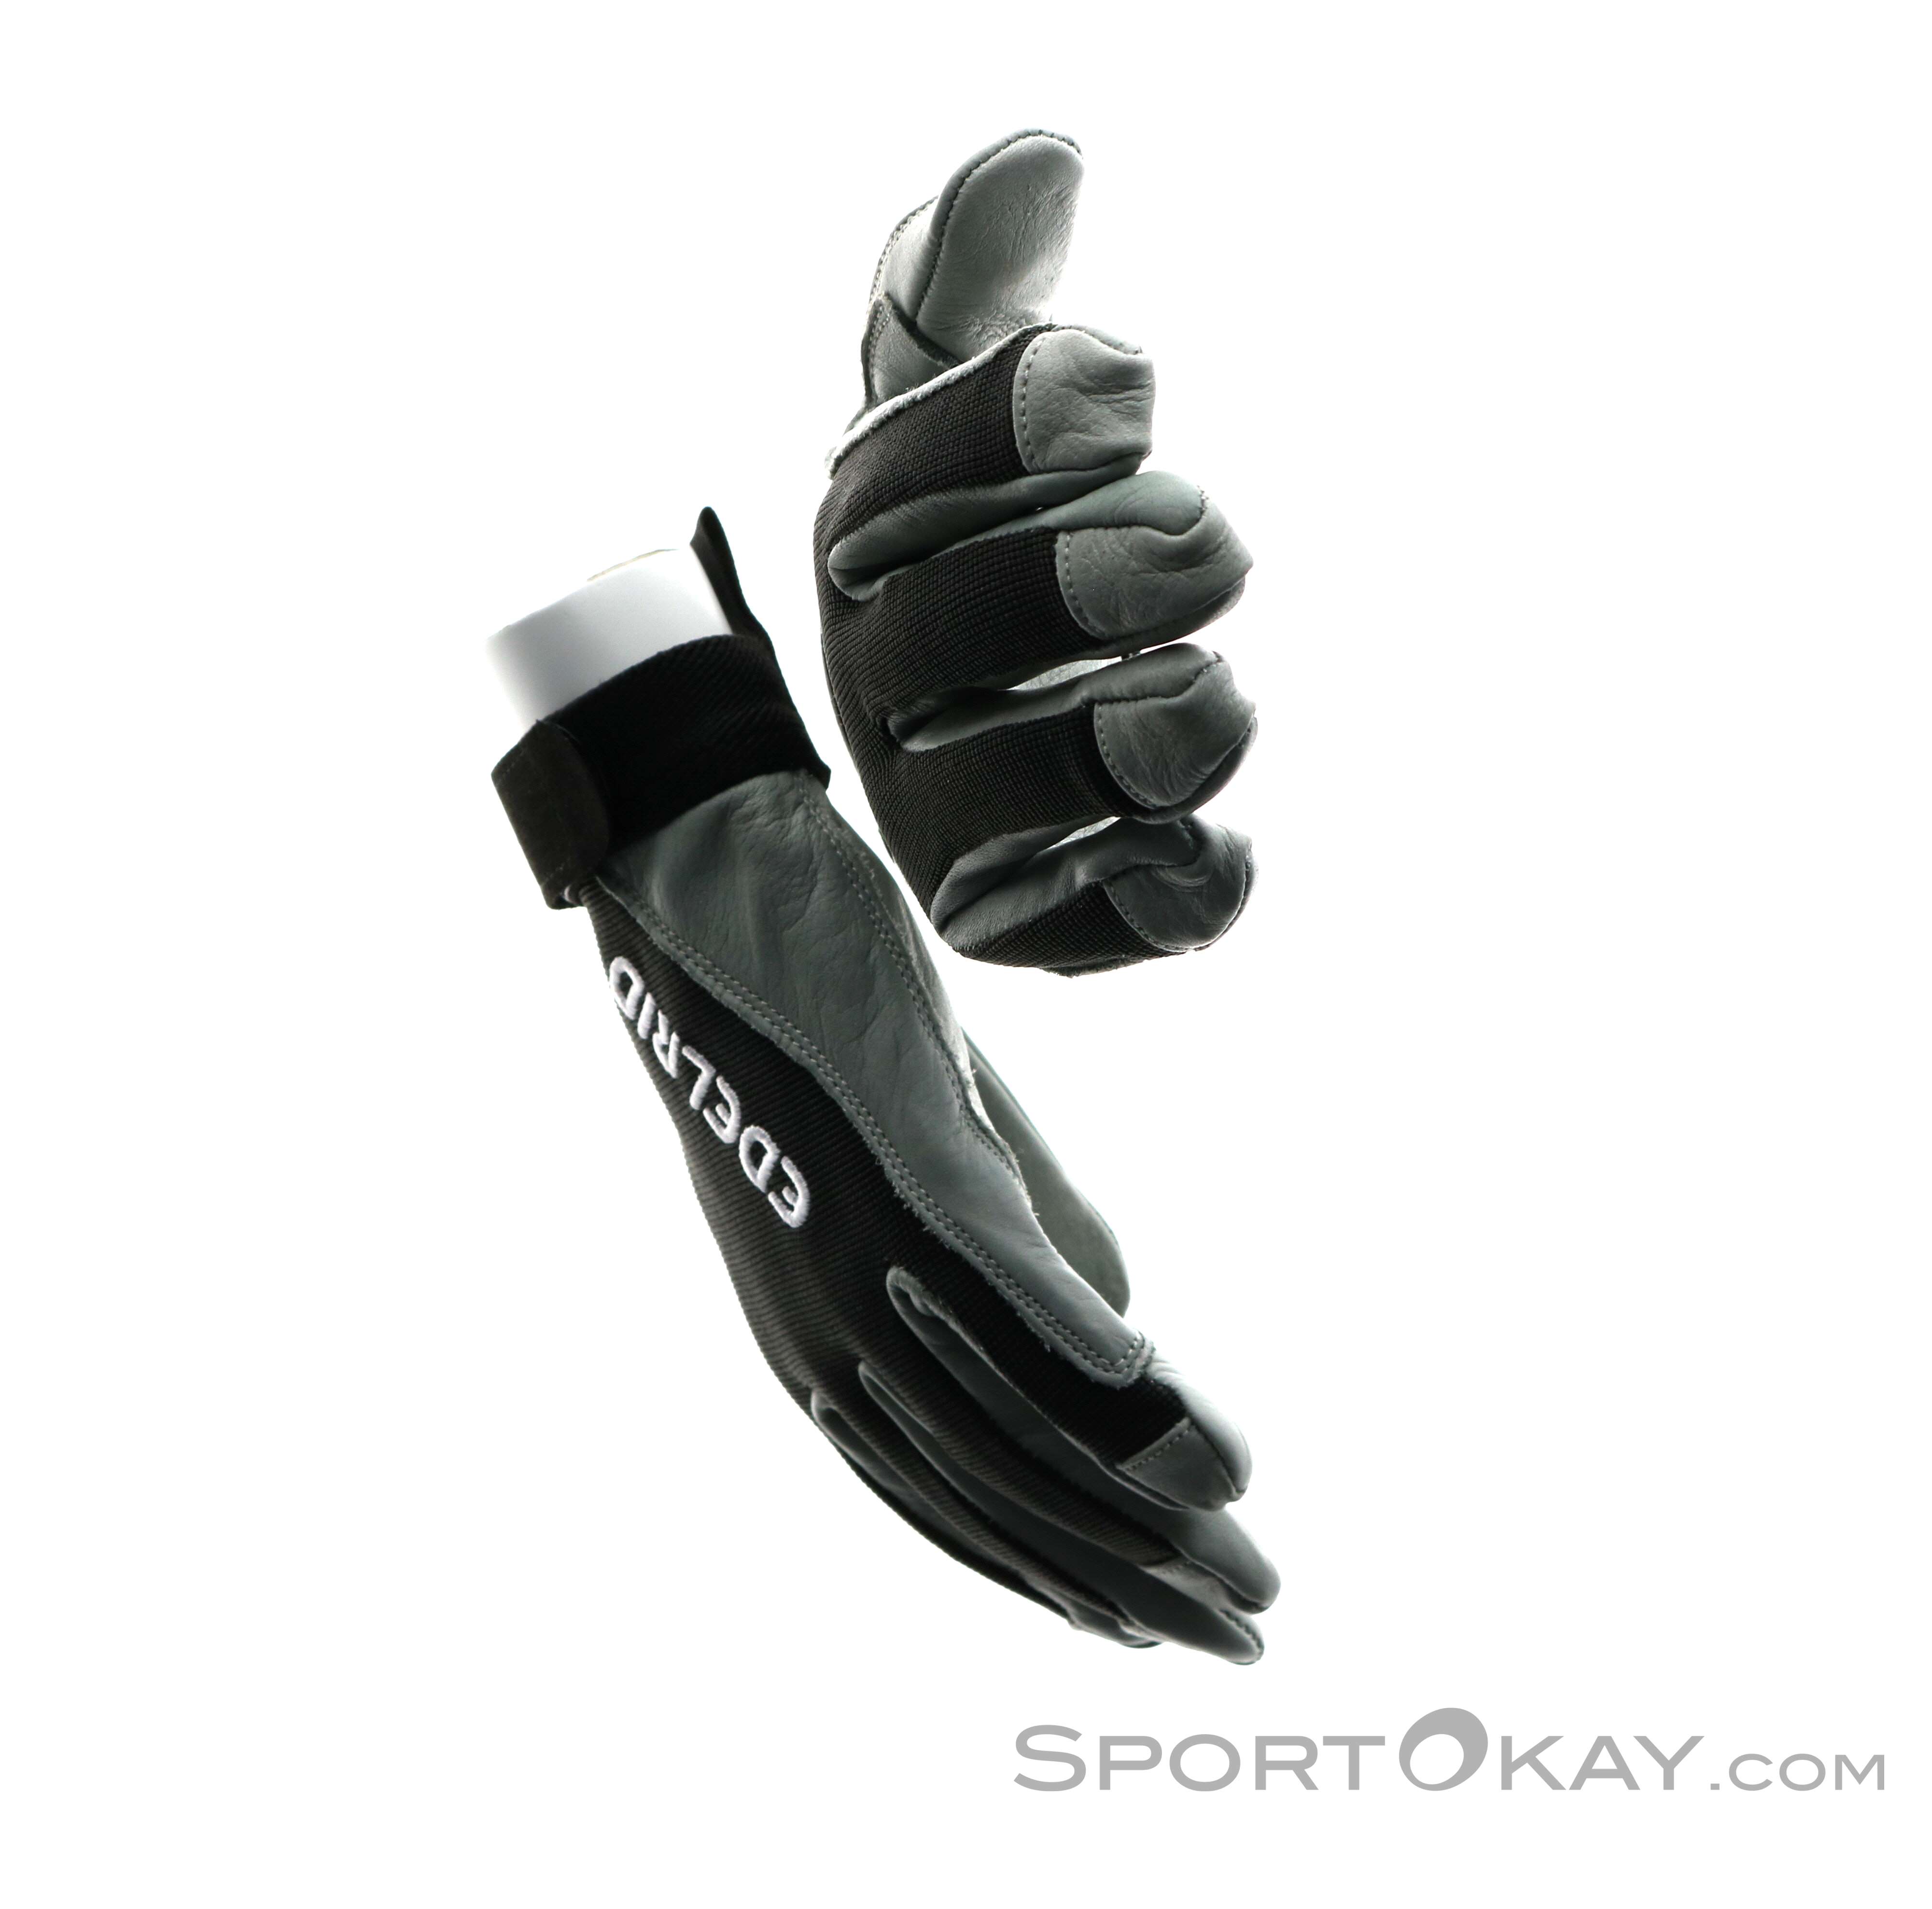 Edelrid Skinny Gloves